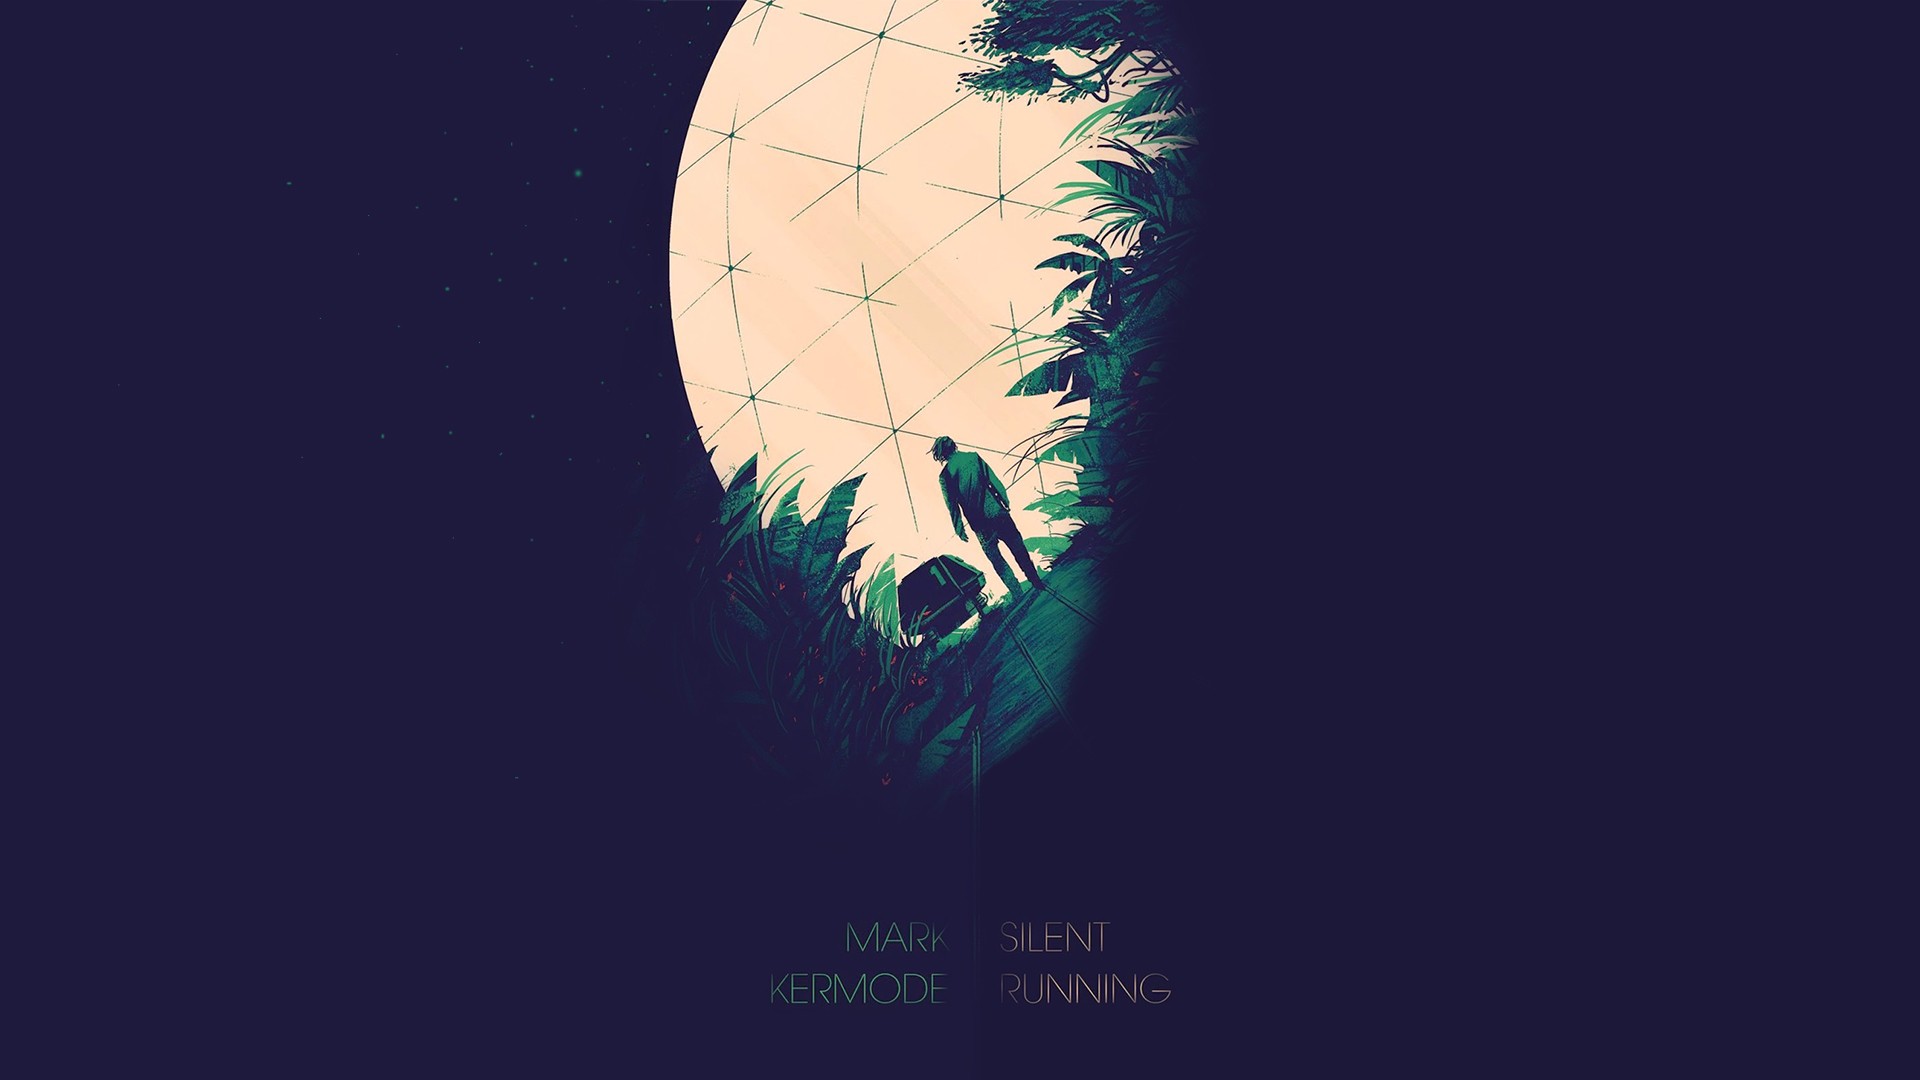 Olly Moss Digital Art Illustration Science Fiction Silent Running Book Cover Mark Kermode Space Trav 1920x1080